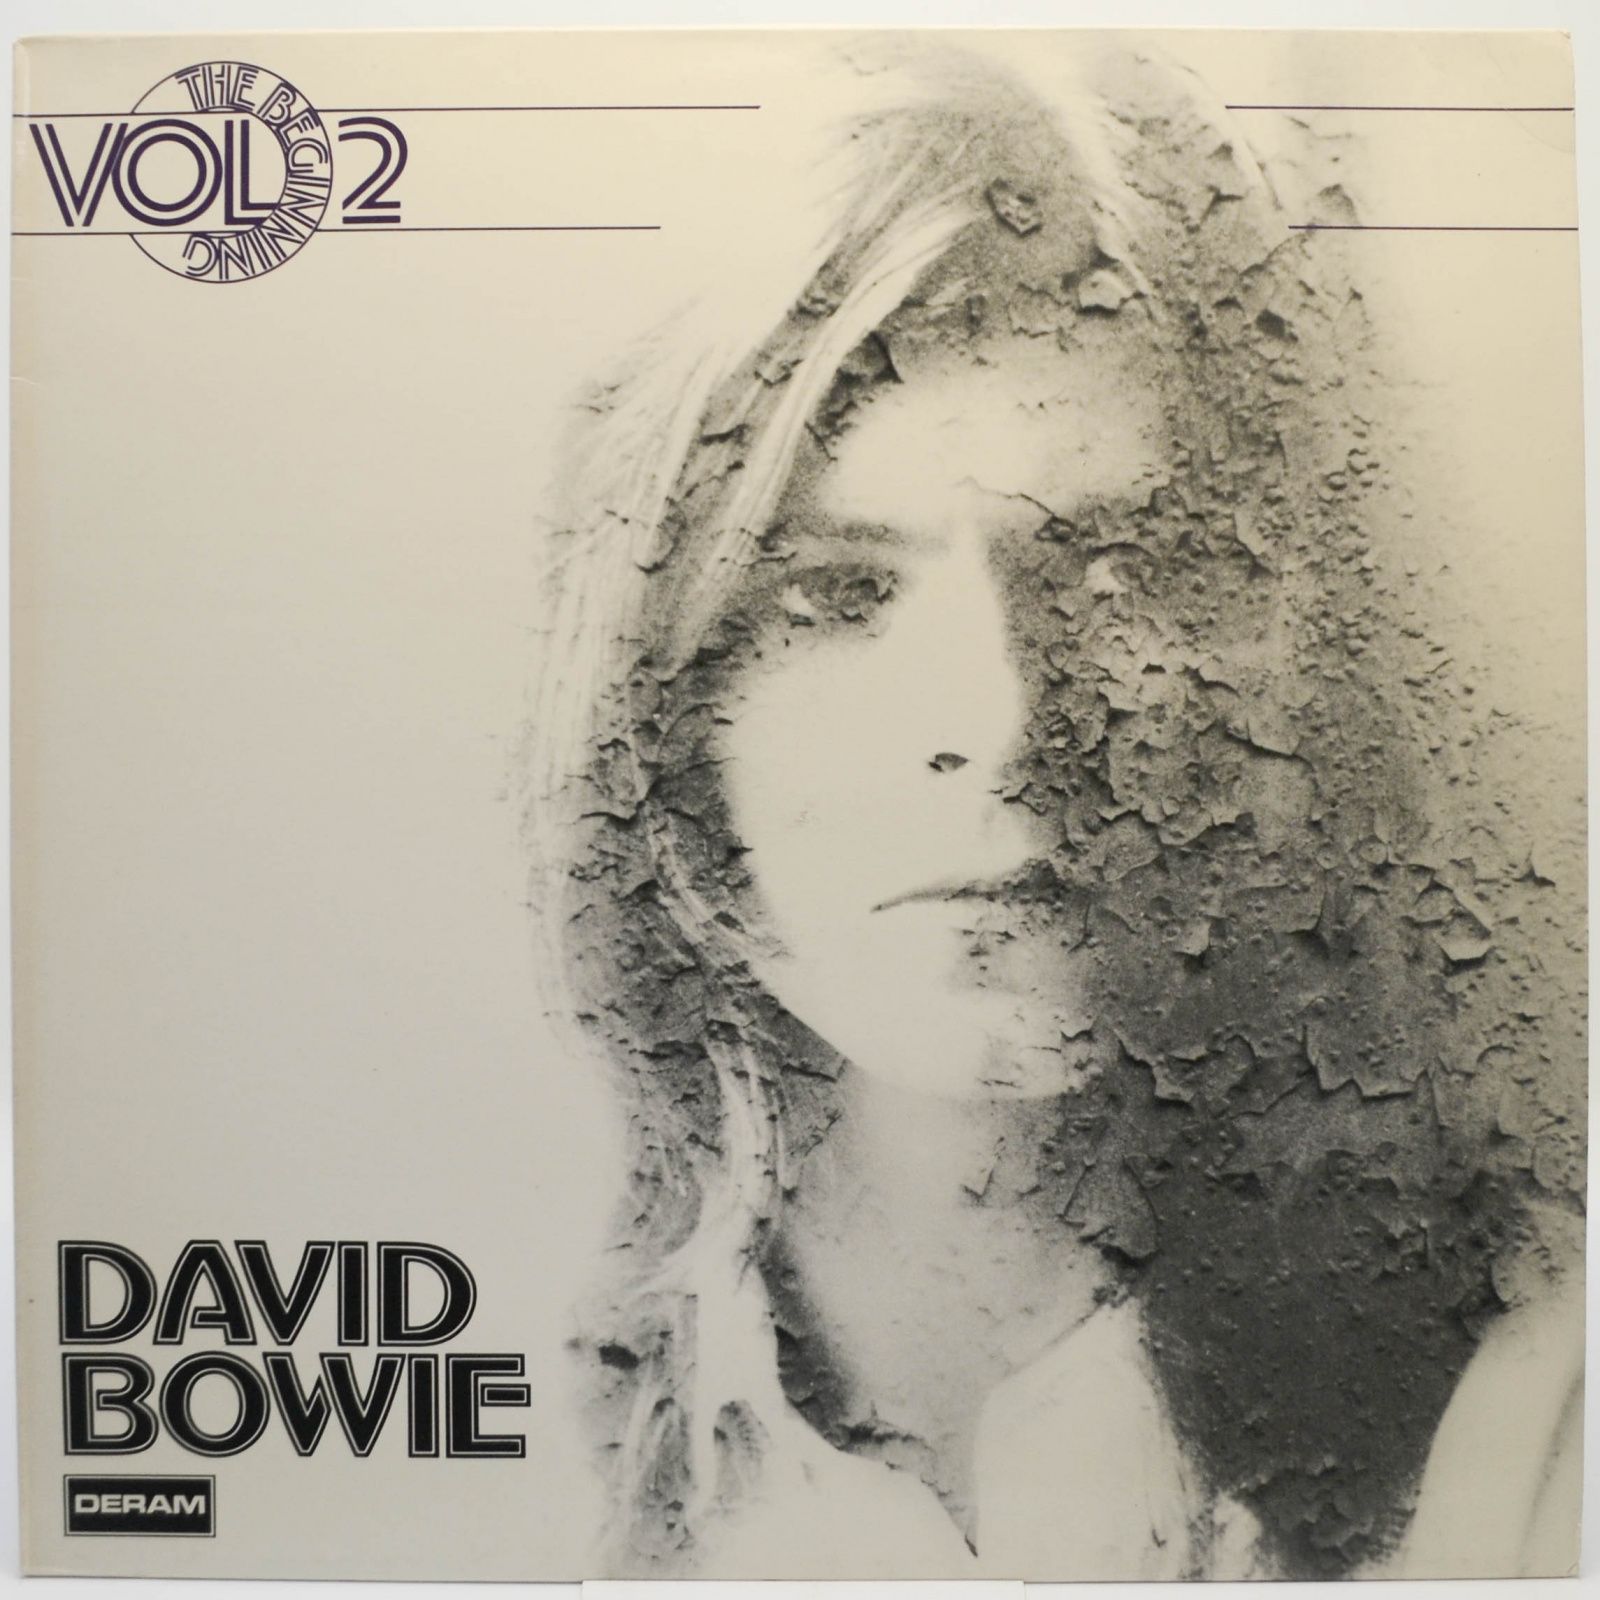 David Bowie — The Beginning - Vol. 2, 1973